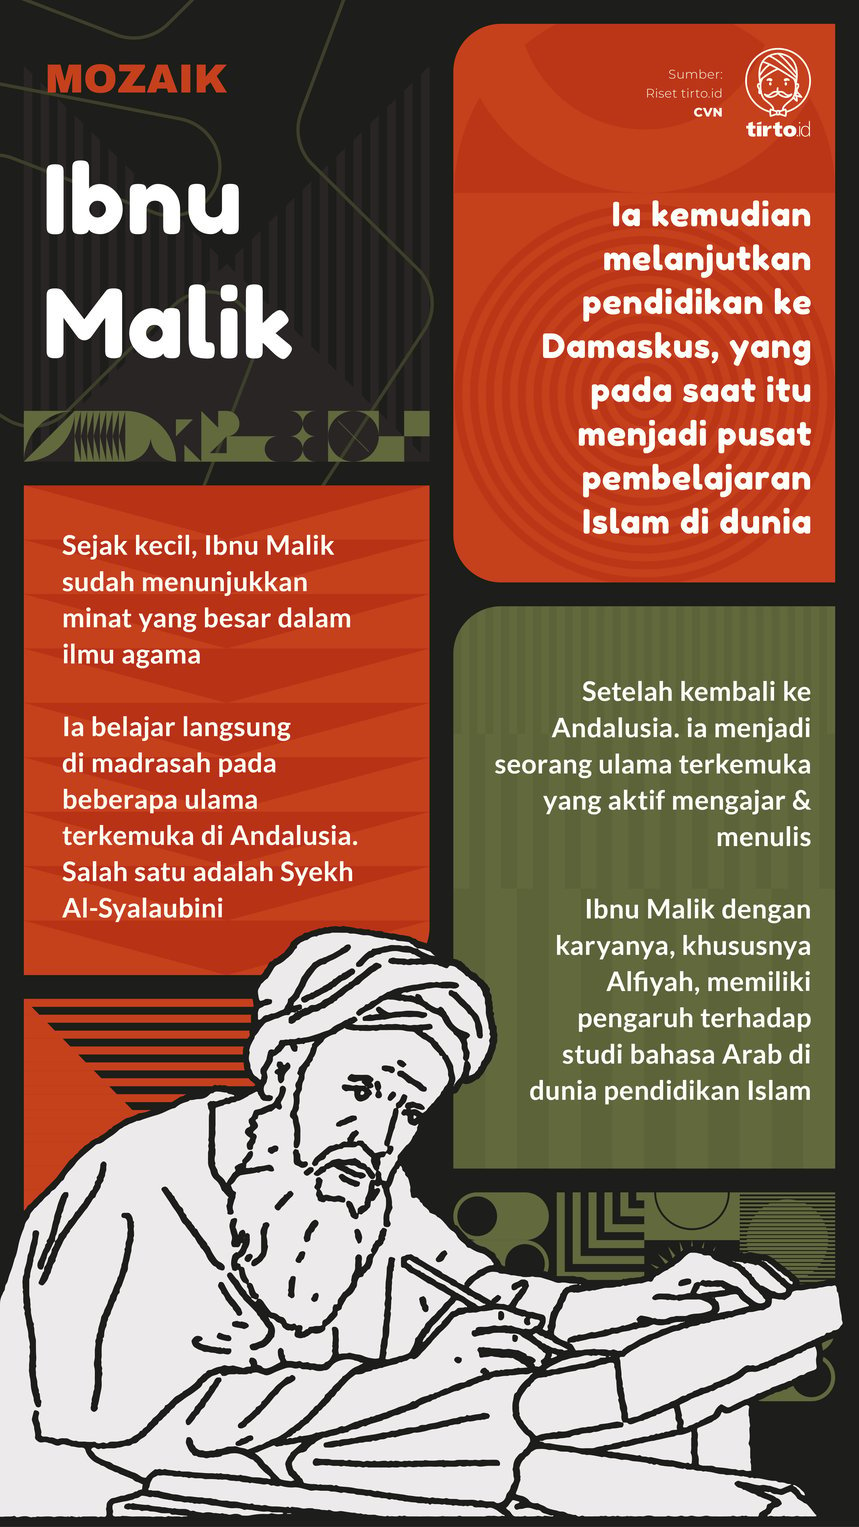 Infografik Mozaik Ibnu Malik